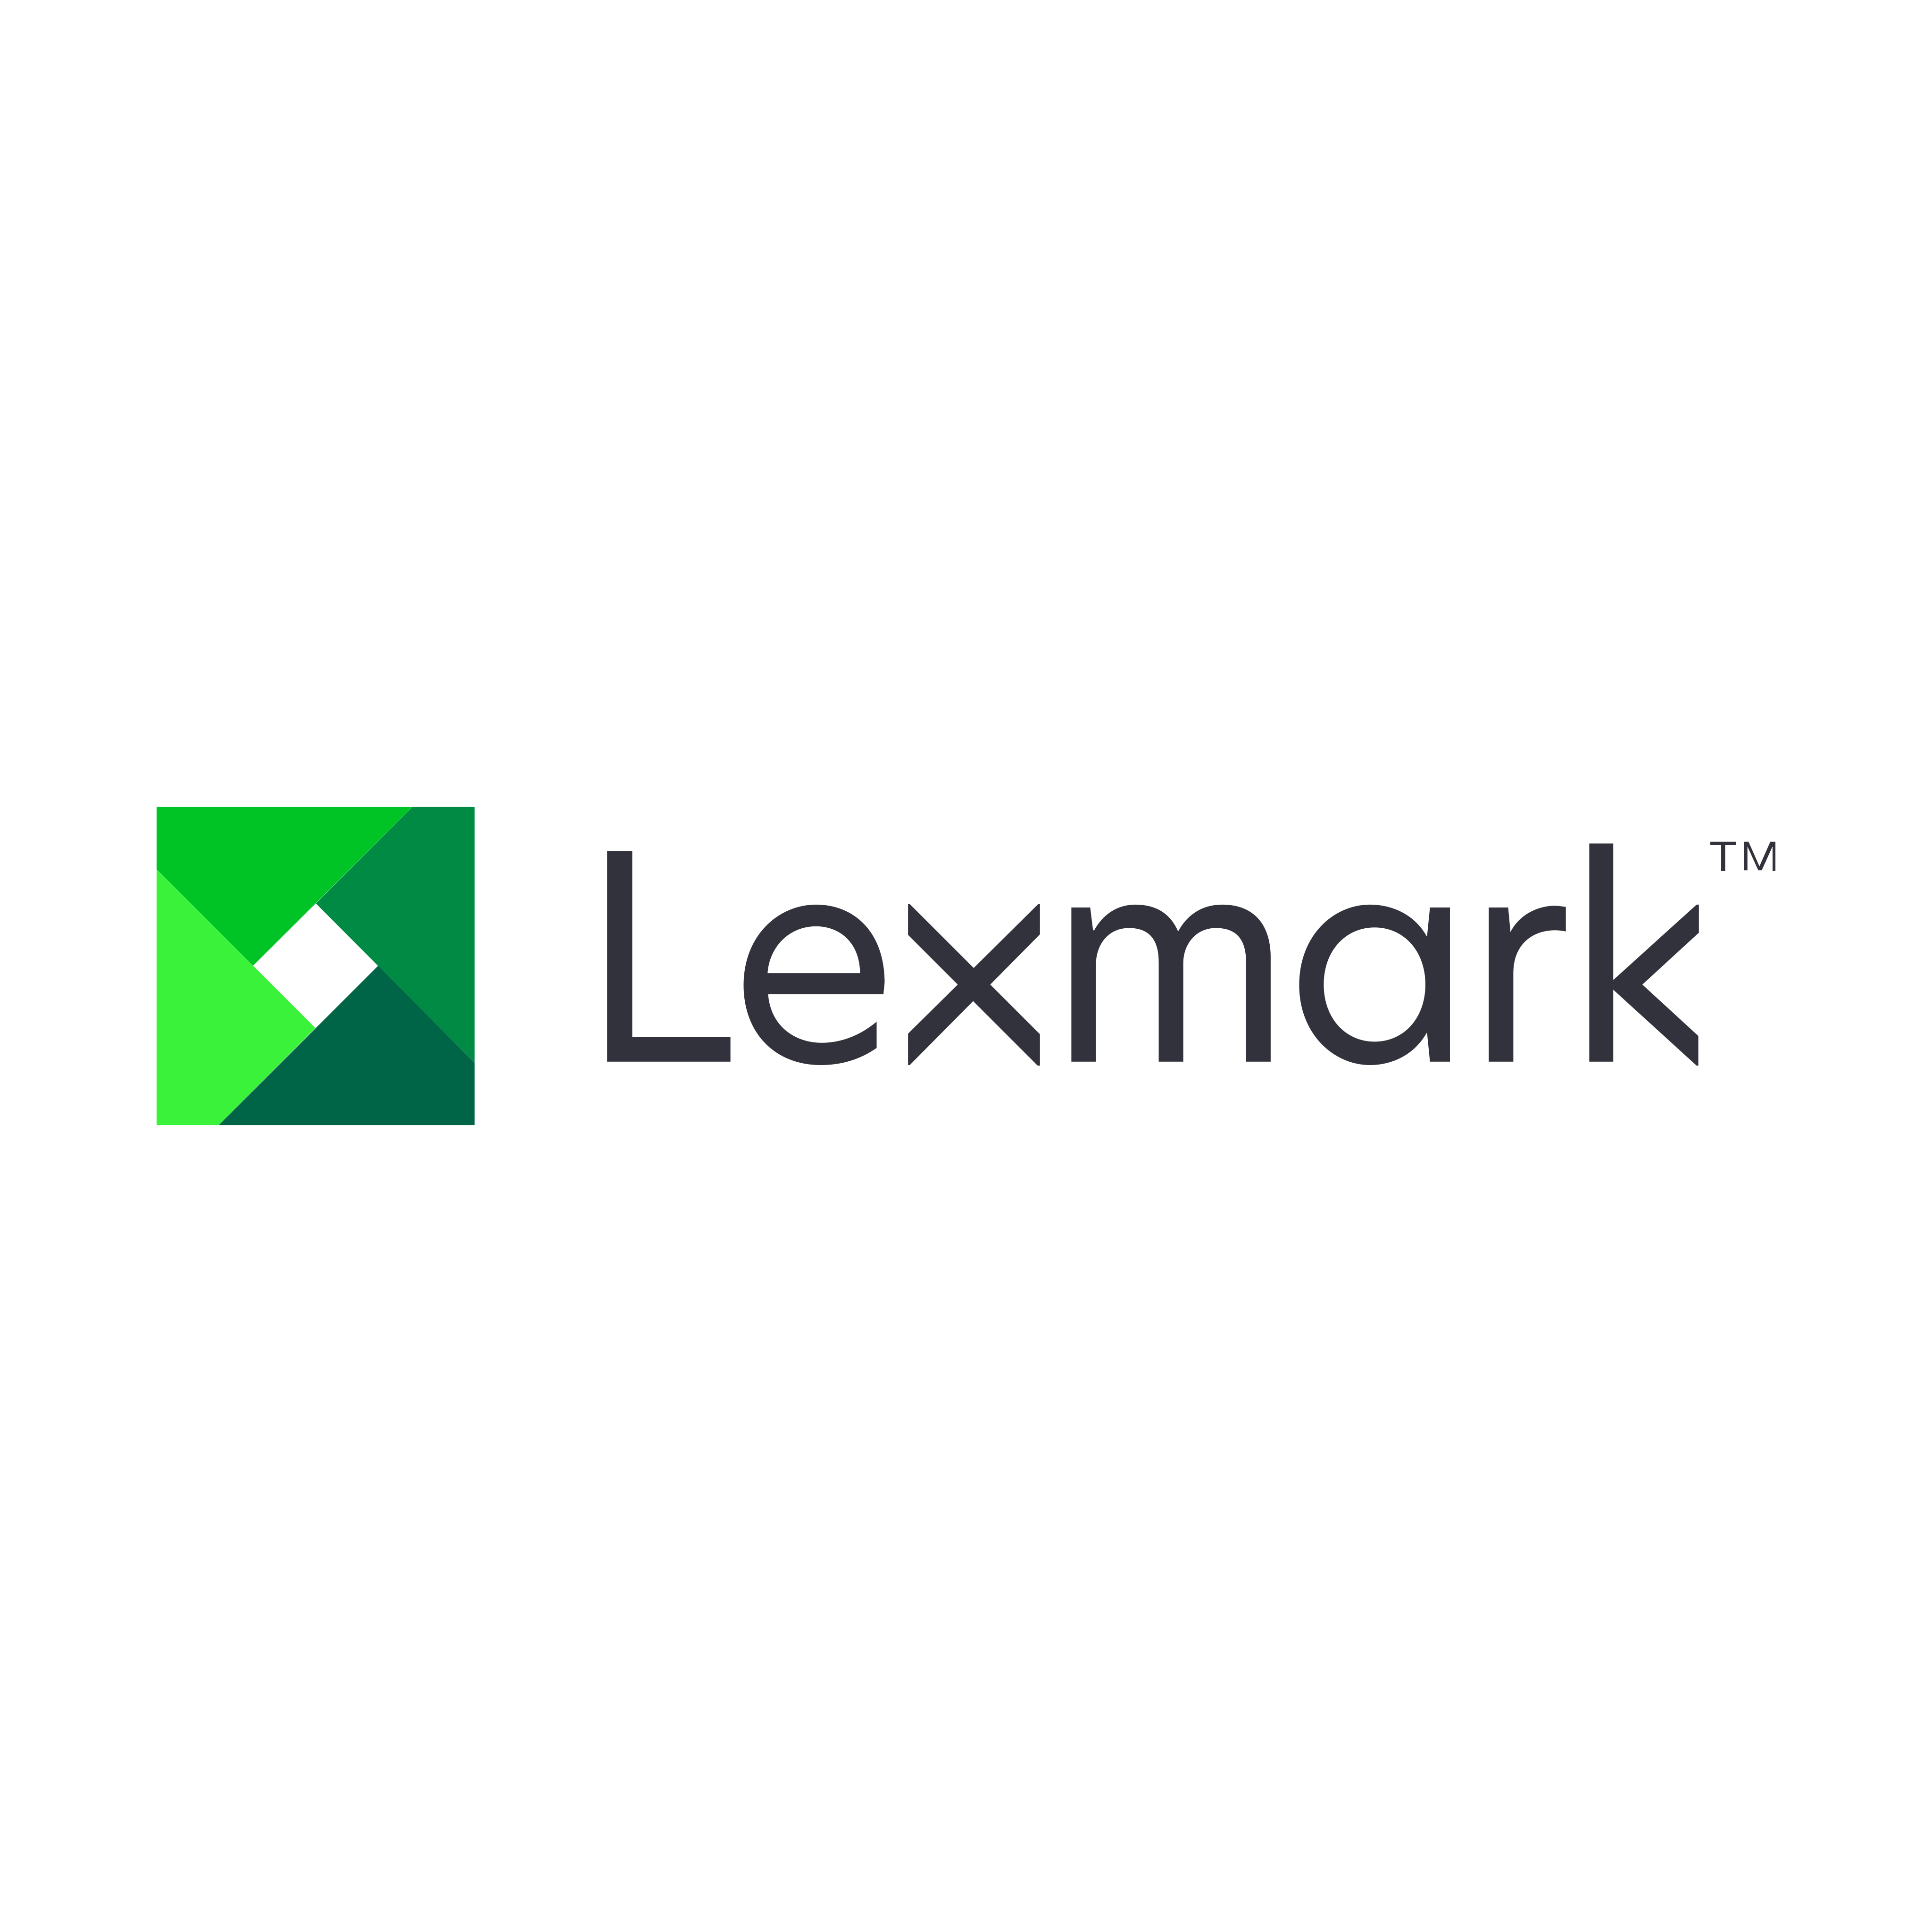 Lexmark Logo PNG.